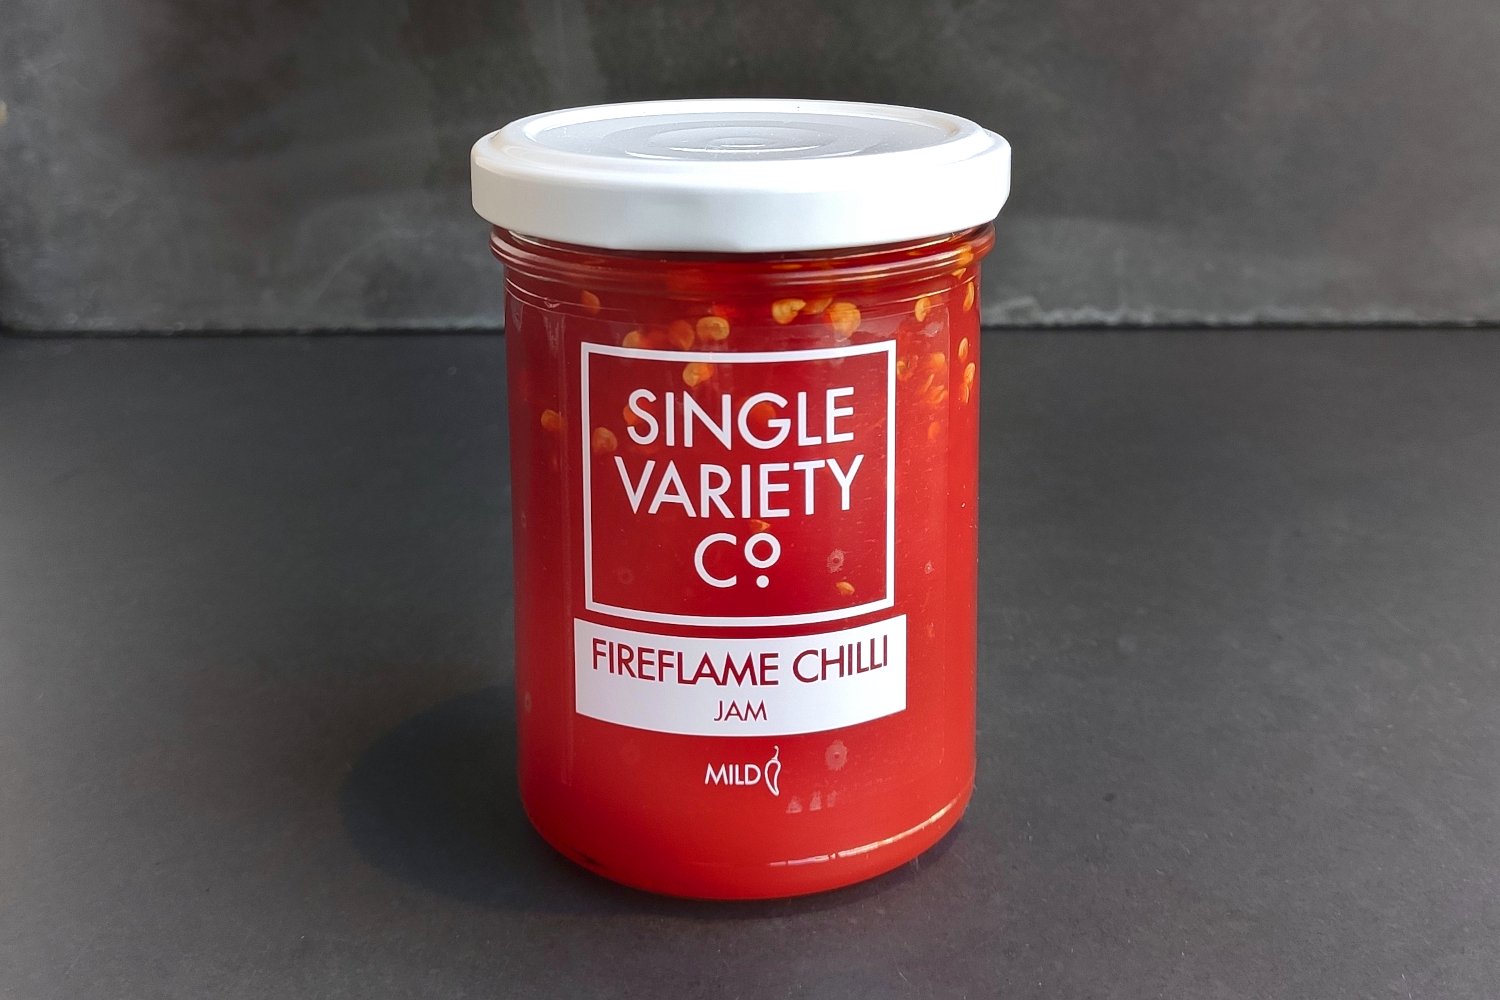 Fireflame Chilli Jam